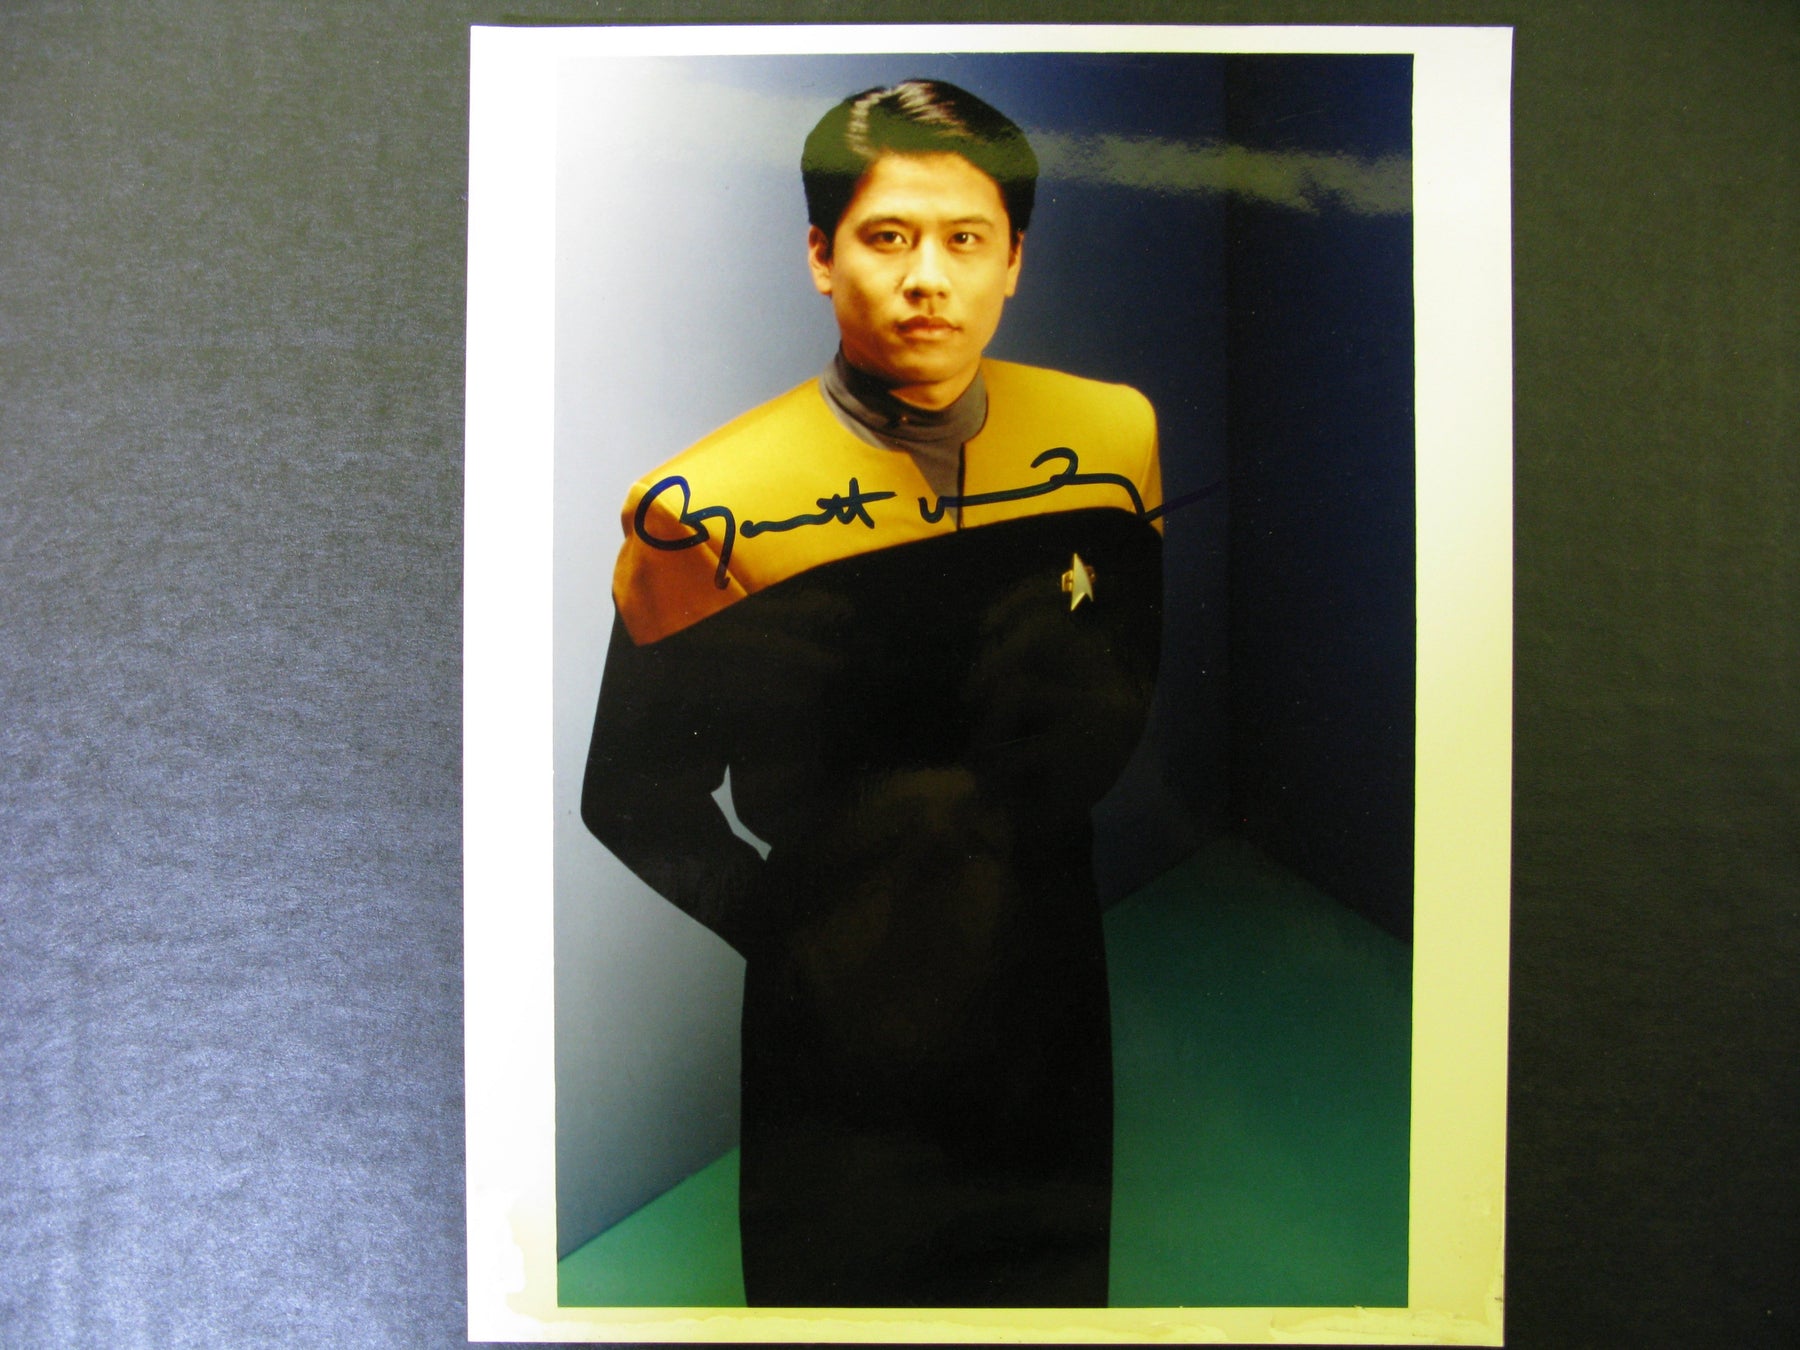 Star Trek Voyager Signed Autograph Photo by Garrett Wang